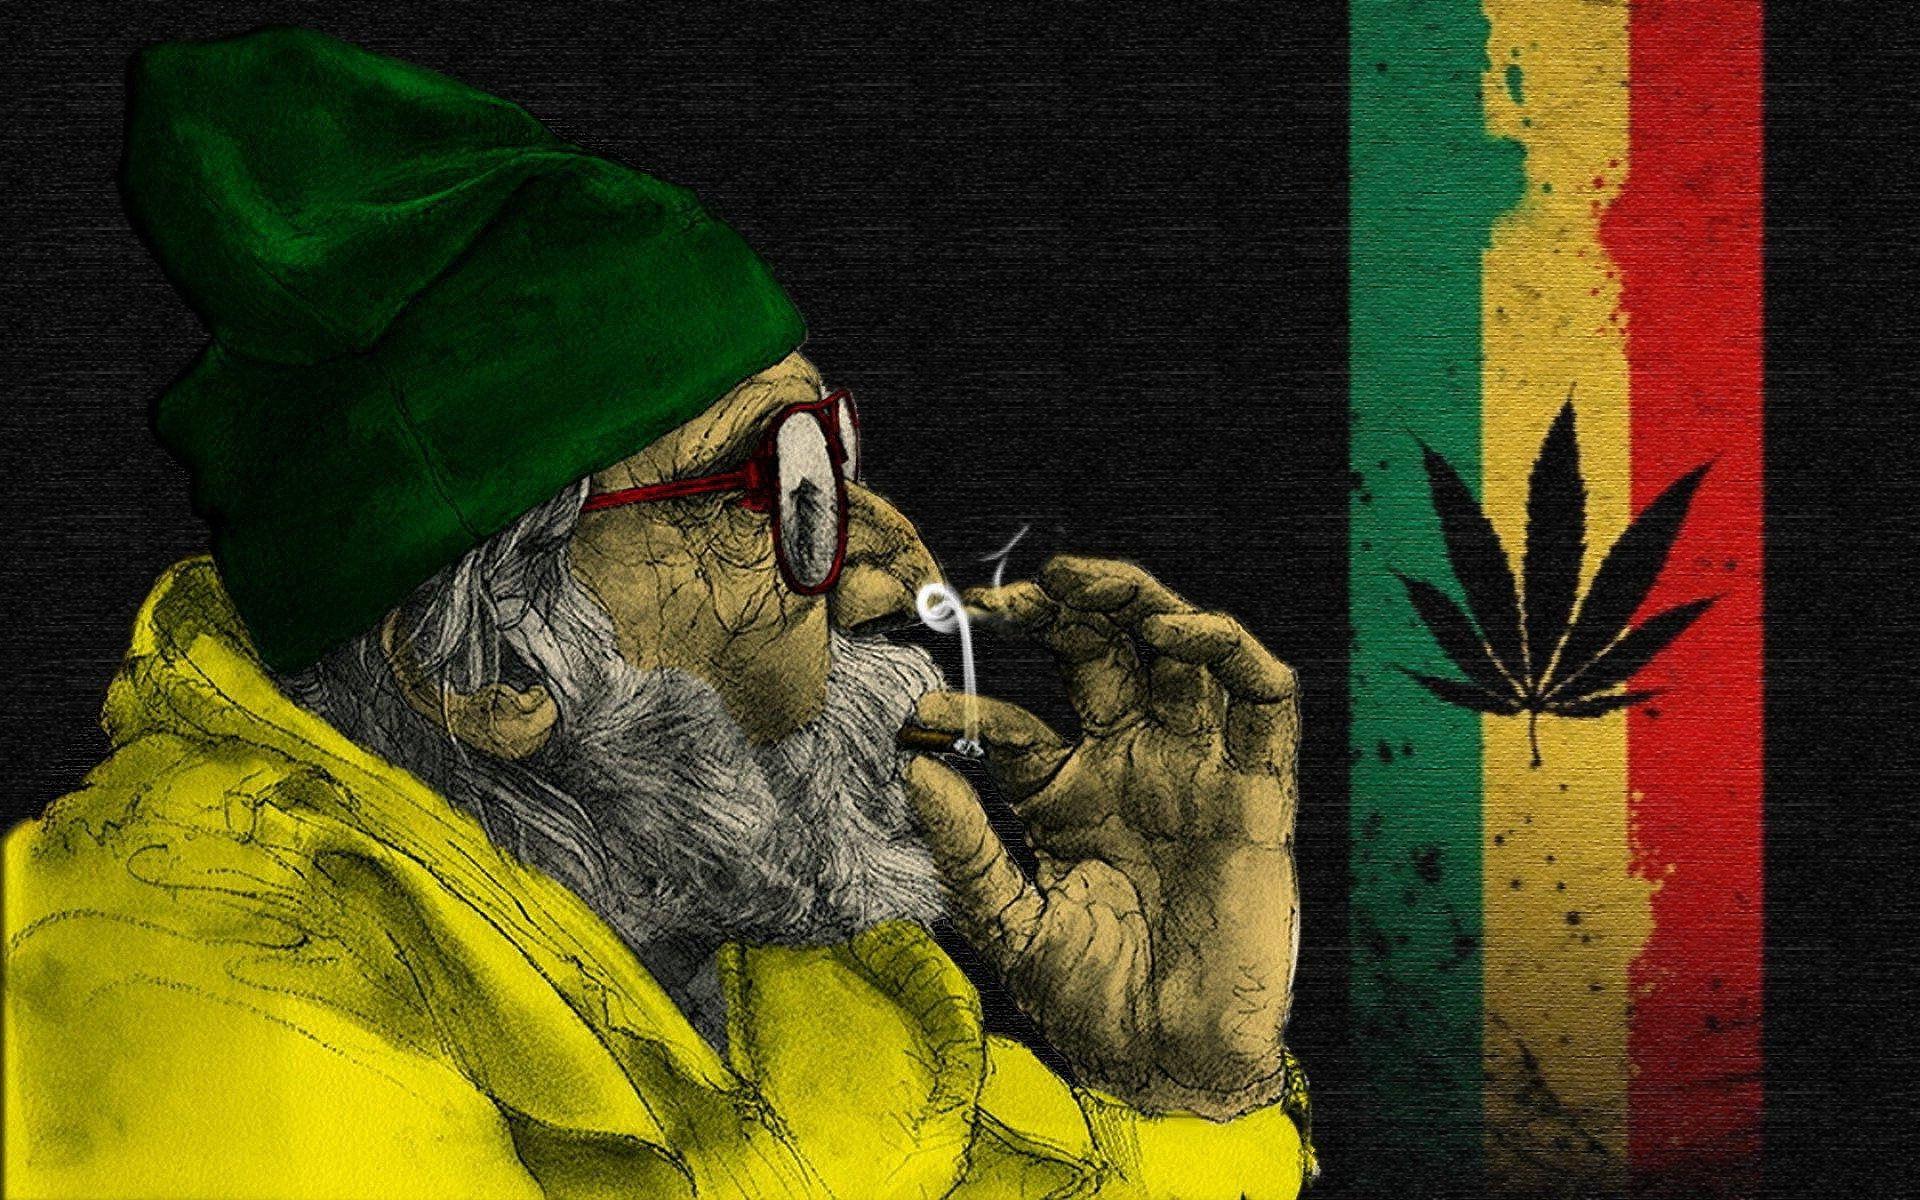 Download 420 weed wallpaper Weed Day 420 Marijuana Cannabis Stoner